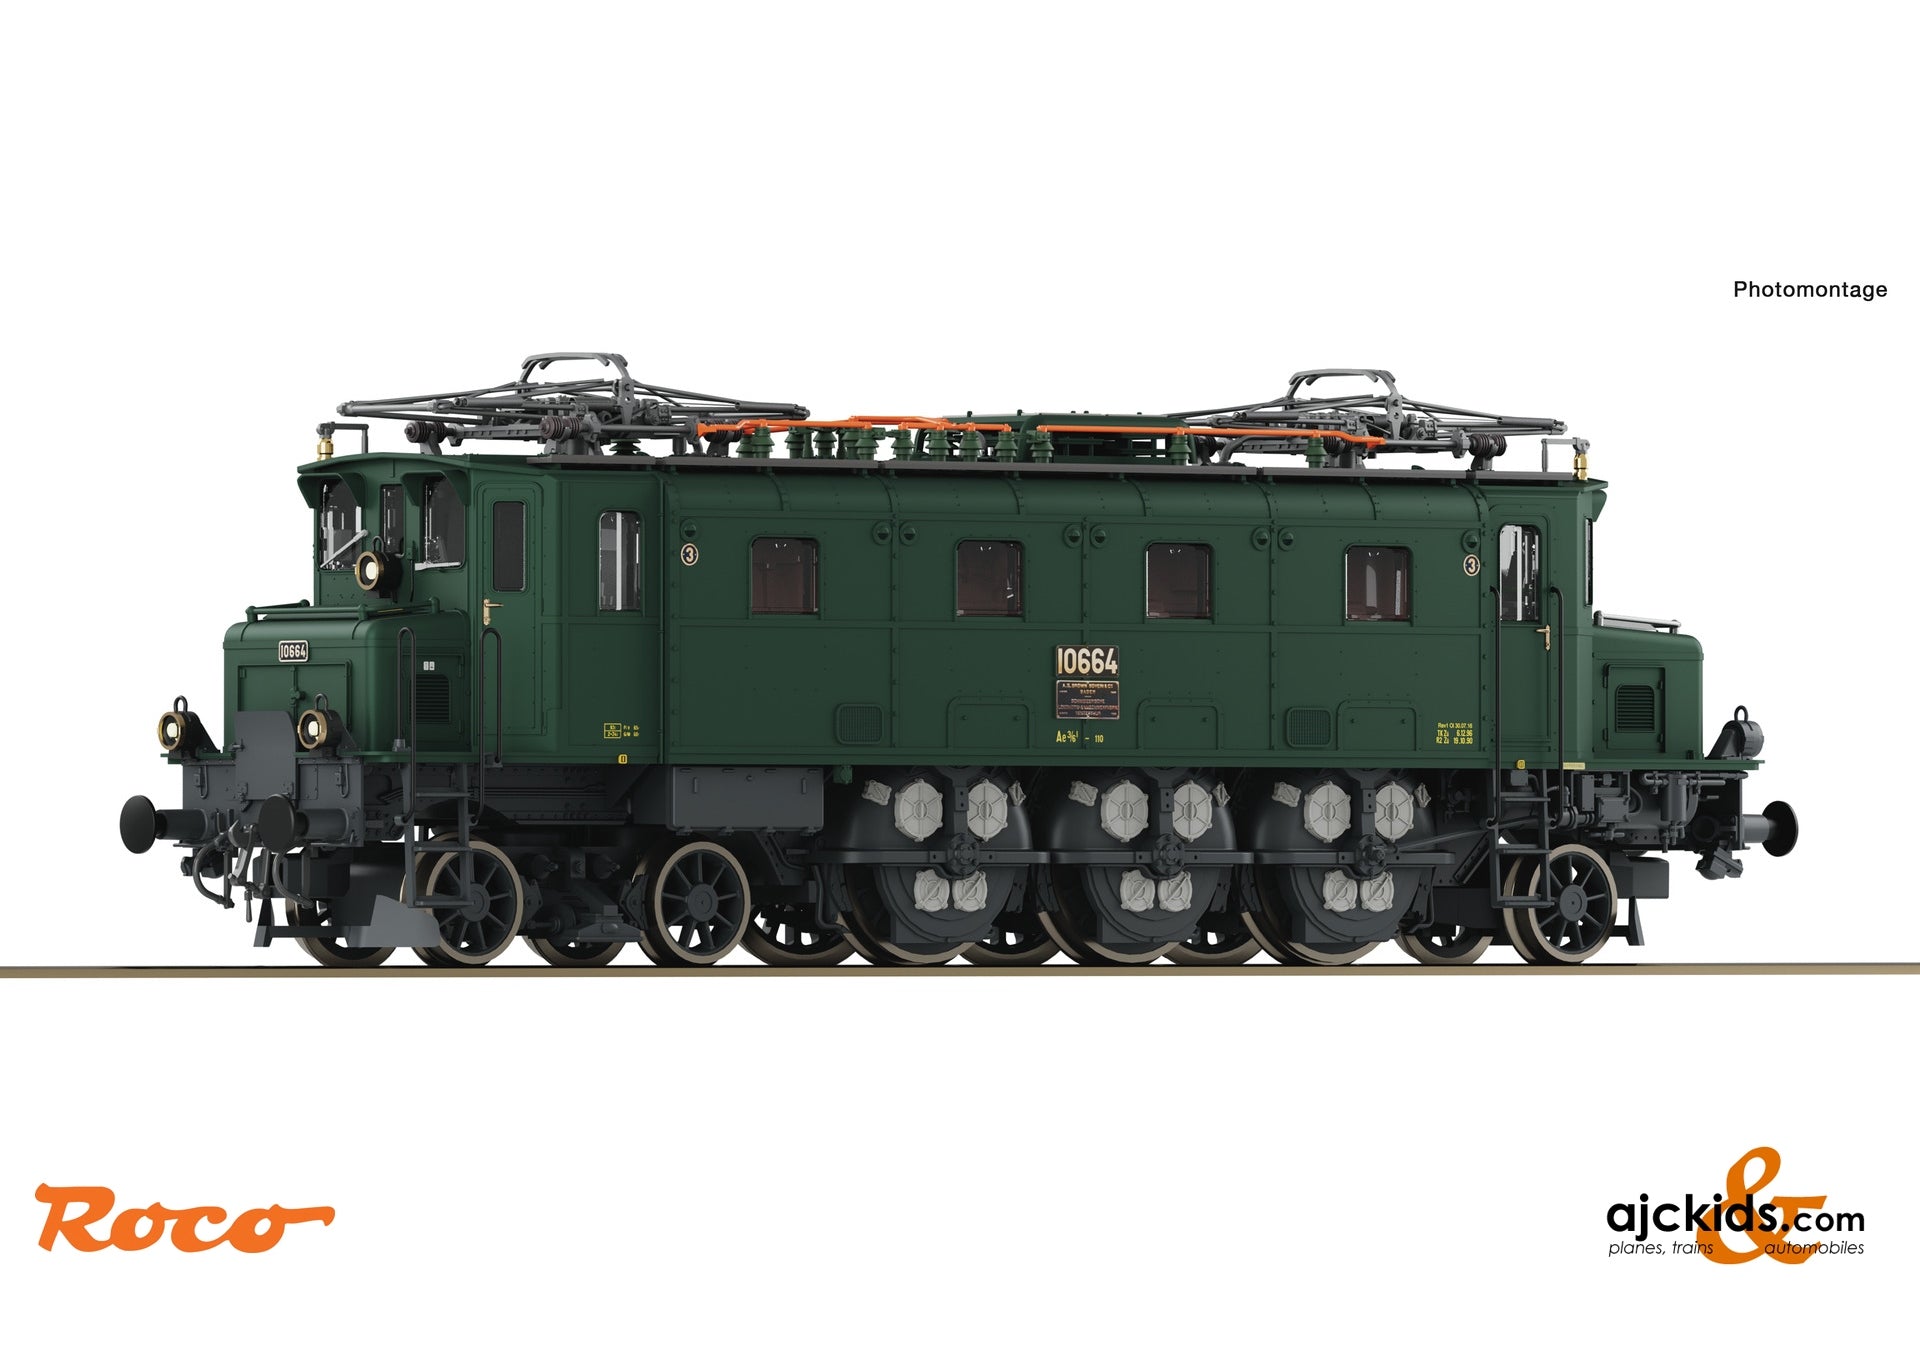 Roco 78092 - Electric locomotive Ae 3/6ˡ 10664, SBB at Ajckids.com